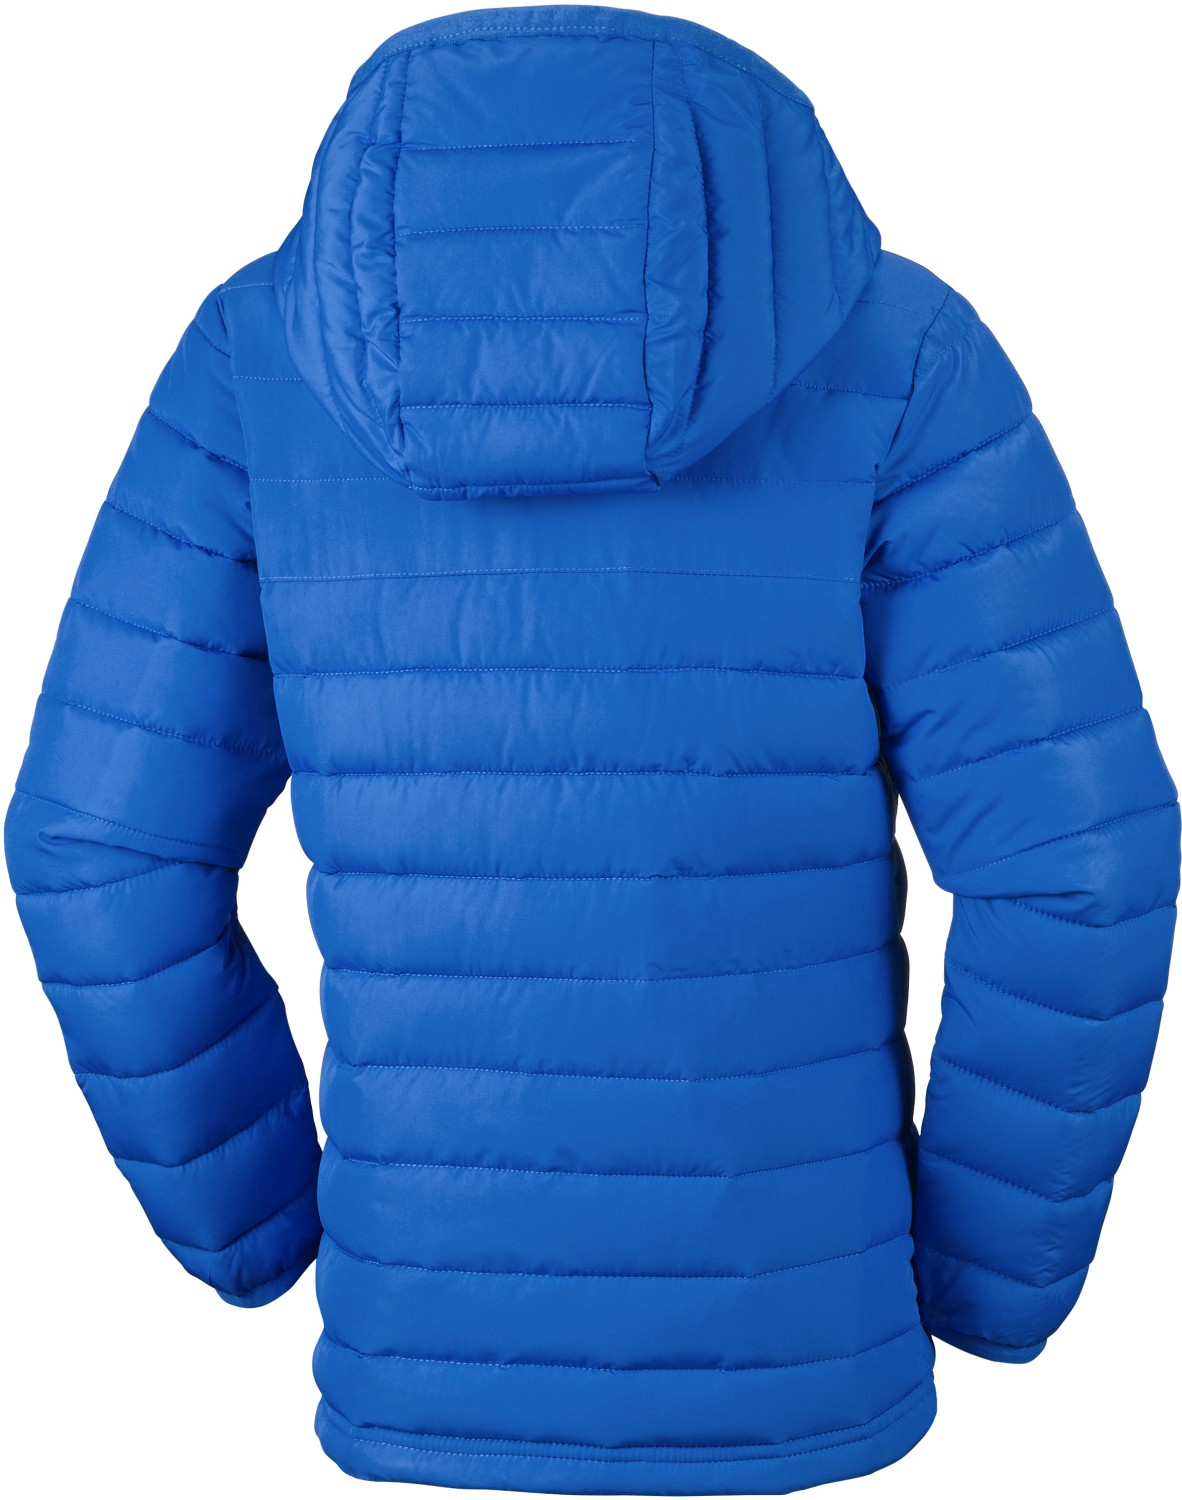 Boys’ insulated jacket